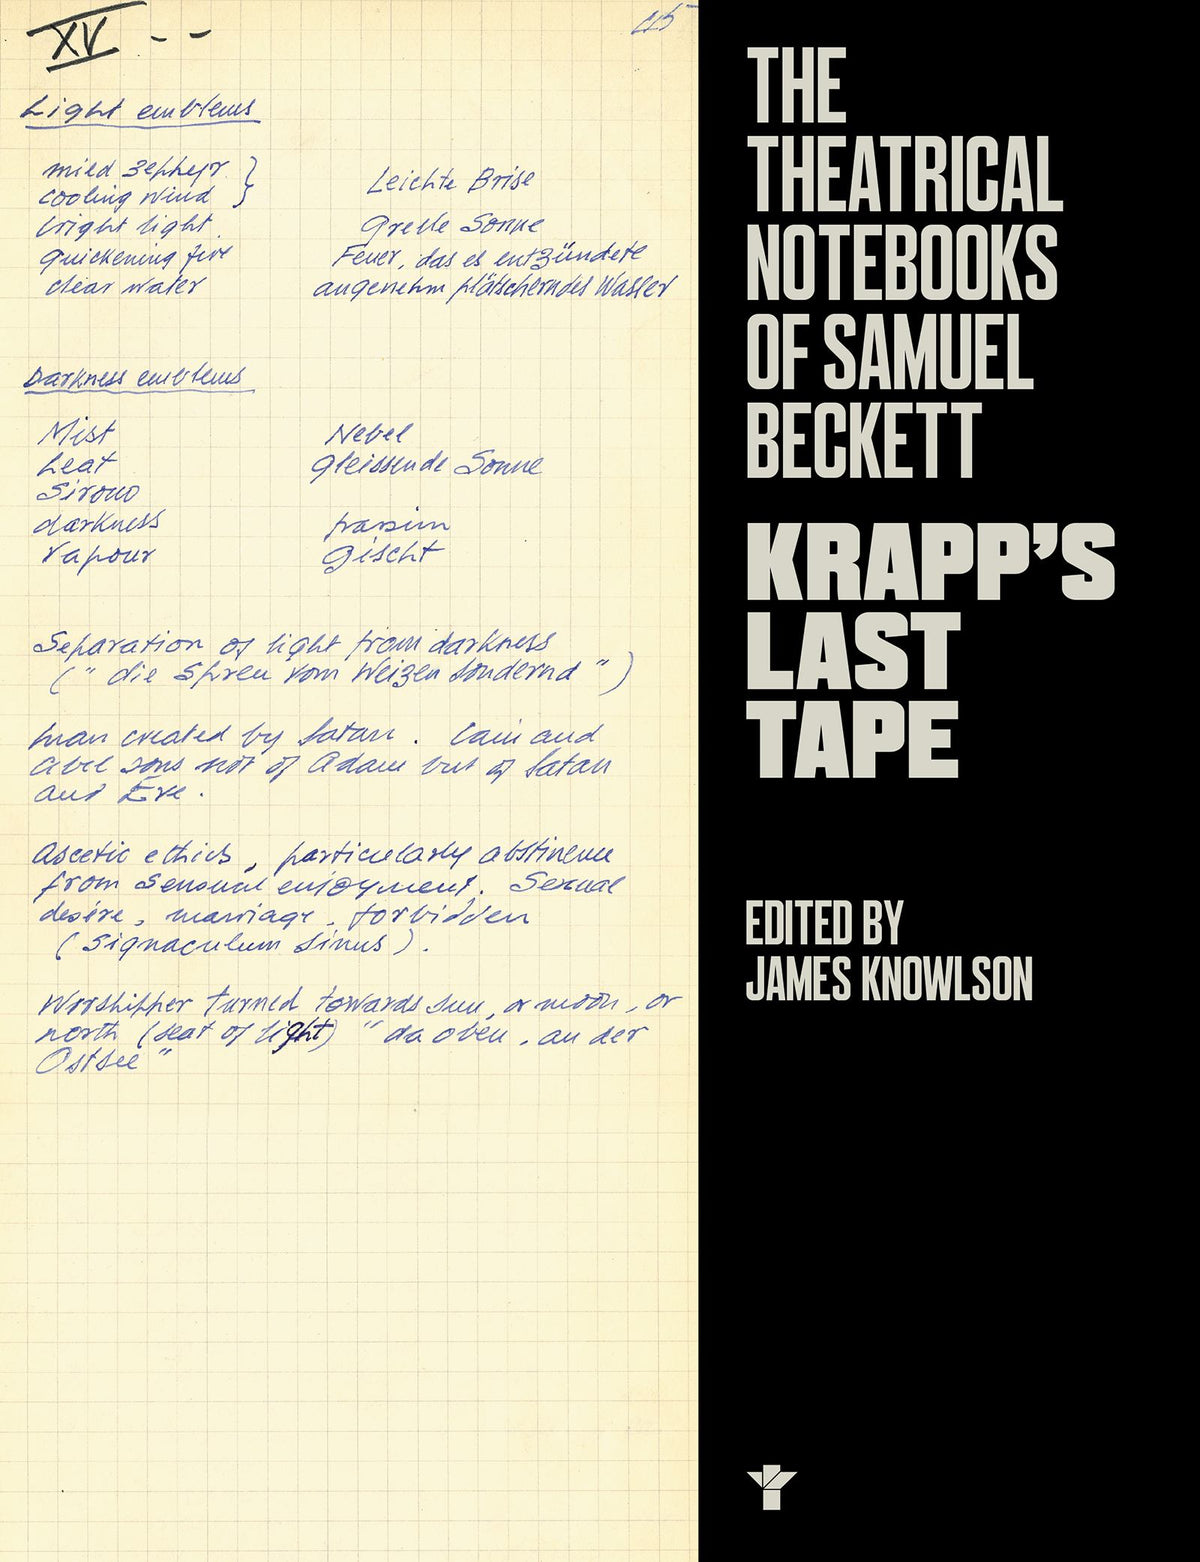 Krapp's Last Tape